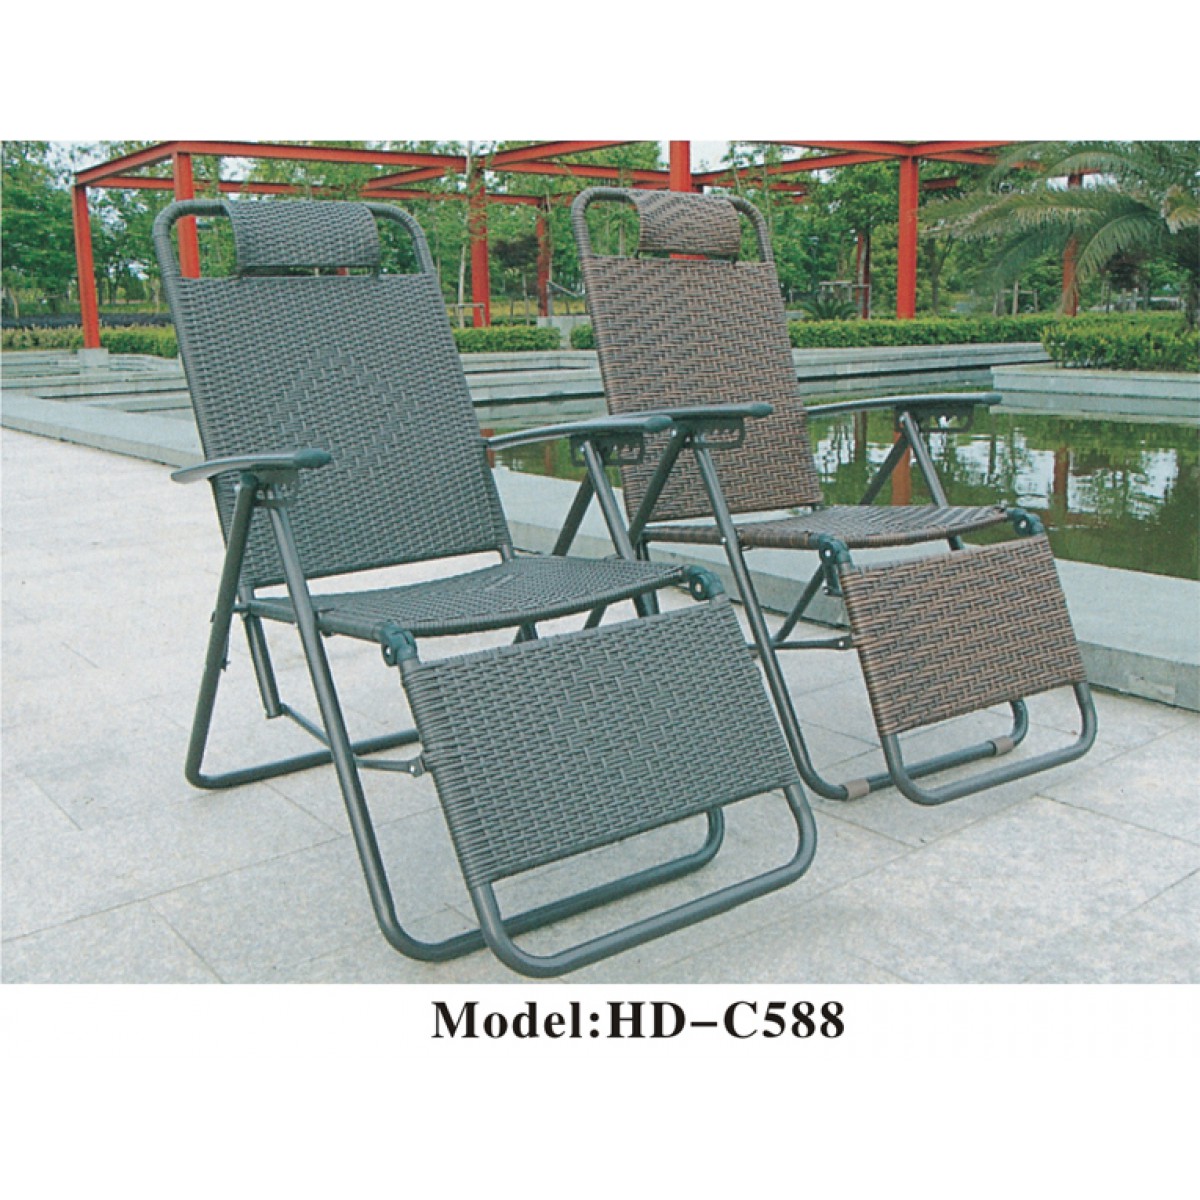 三摺仿藤躺椅(HD-C588)